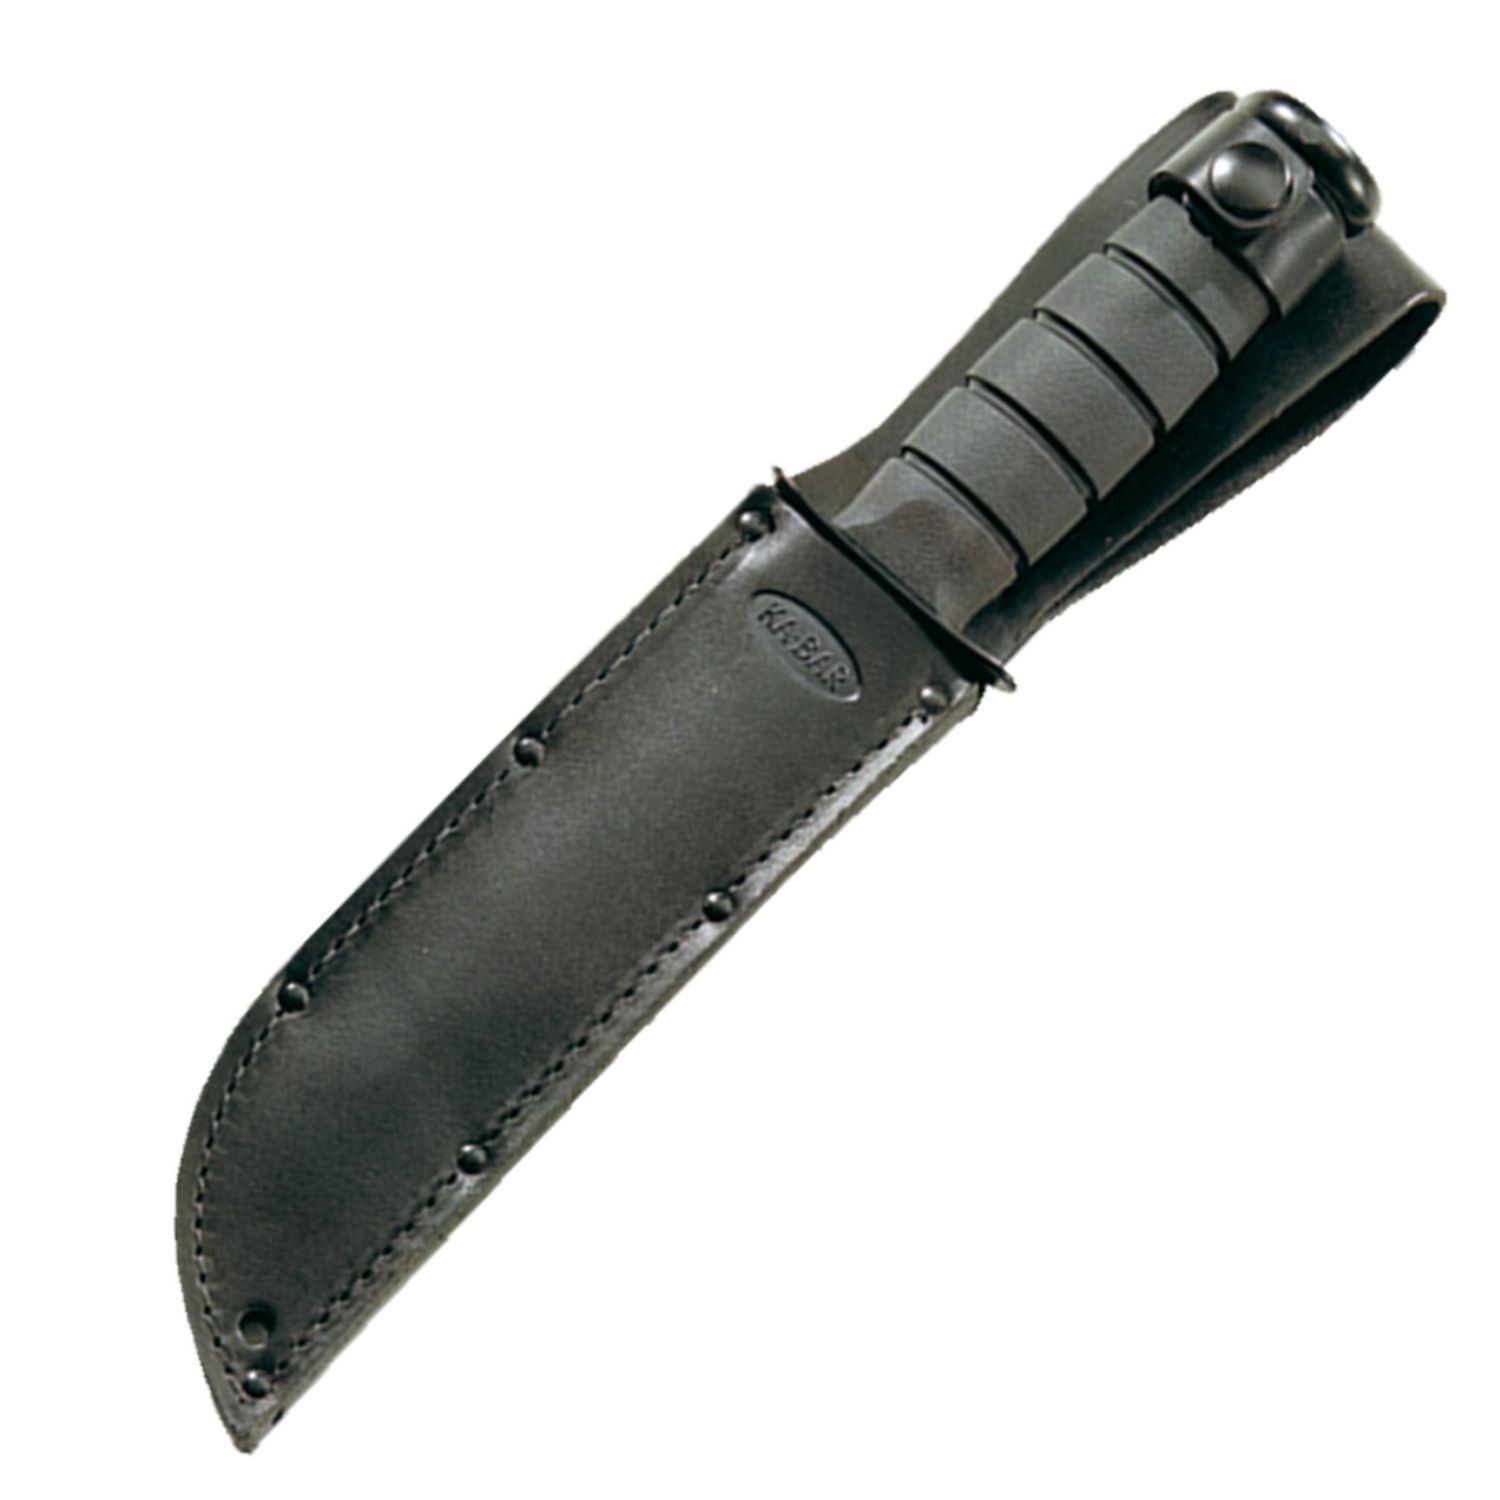 Knife FIGHTING / UTILITY Tanto straight sharp black KA-BAR 02-1254 L-11